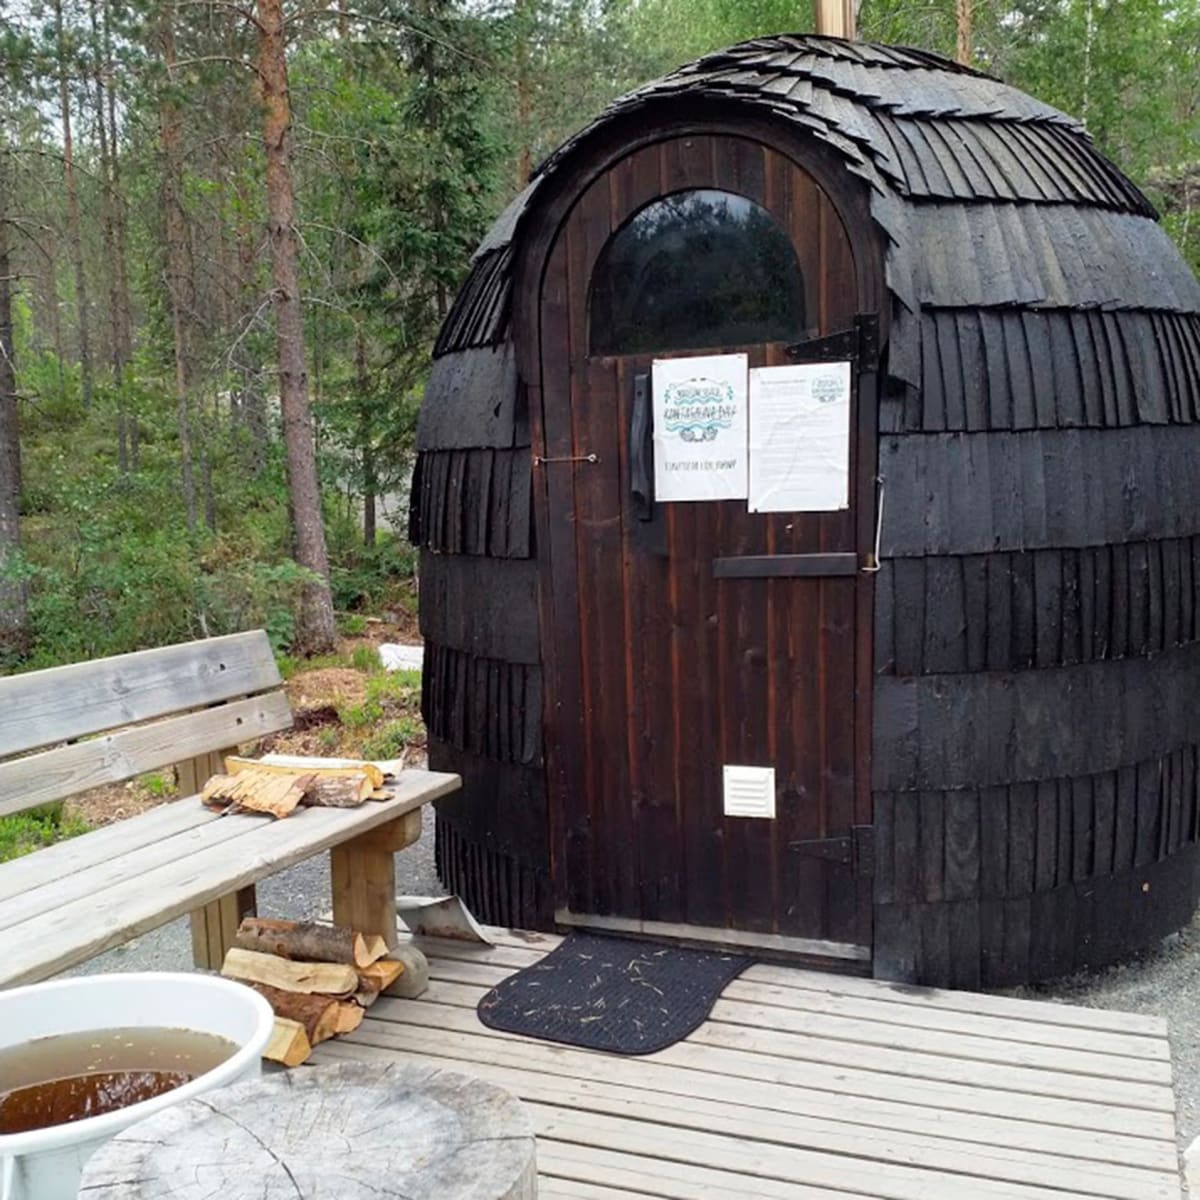 Matkoslampi shelter | Visit Finland